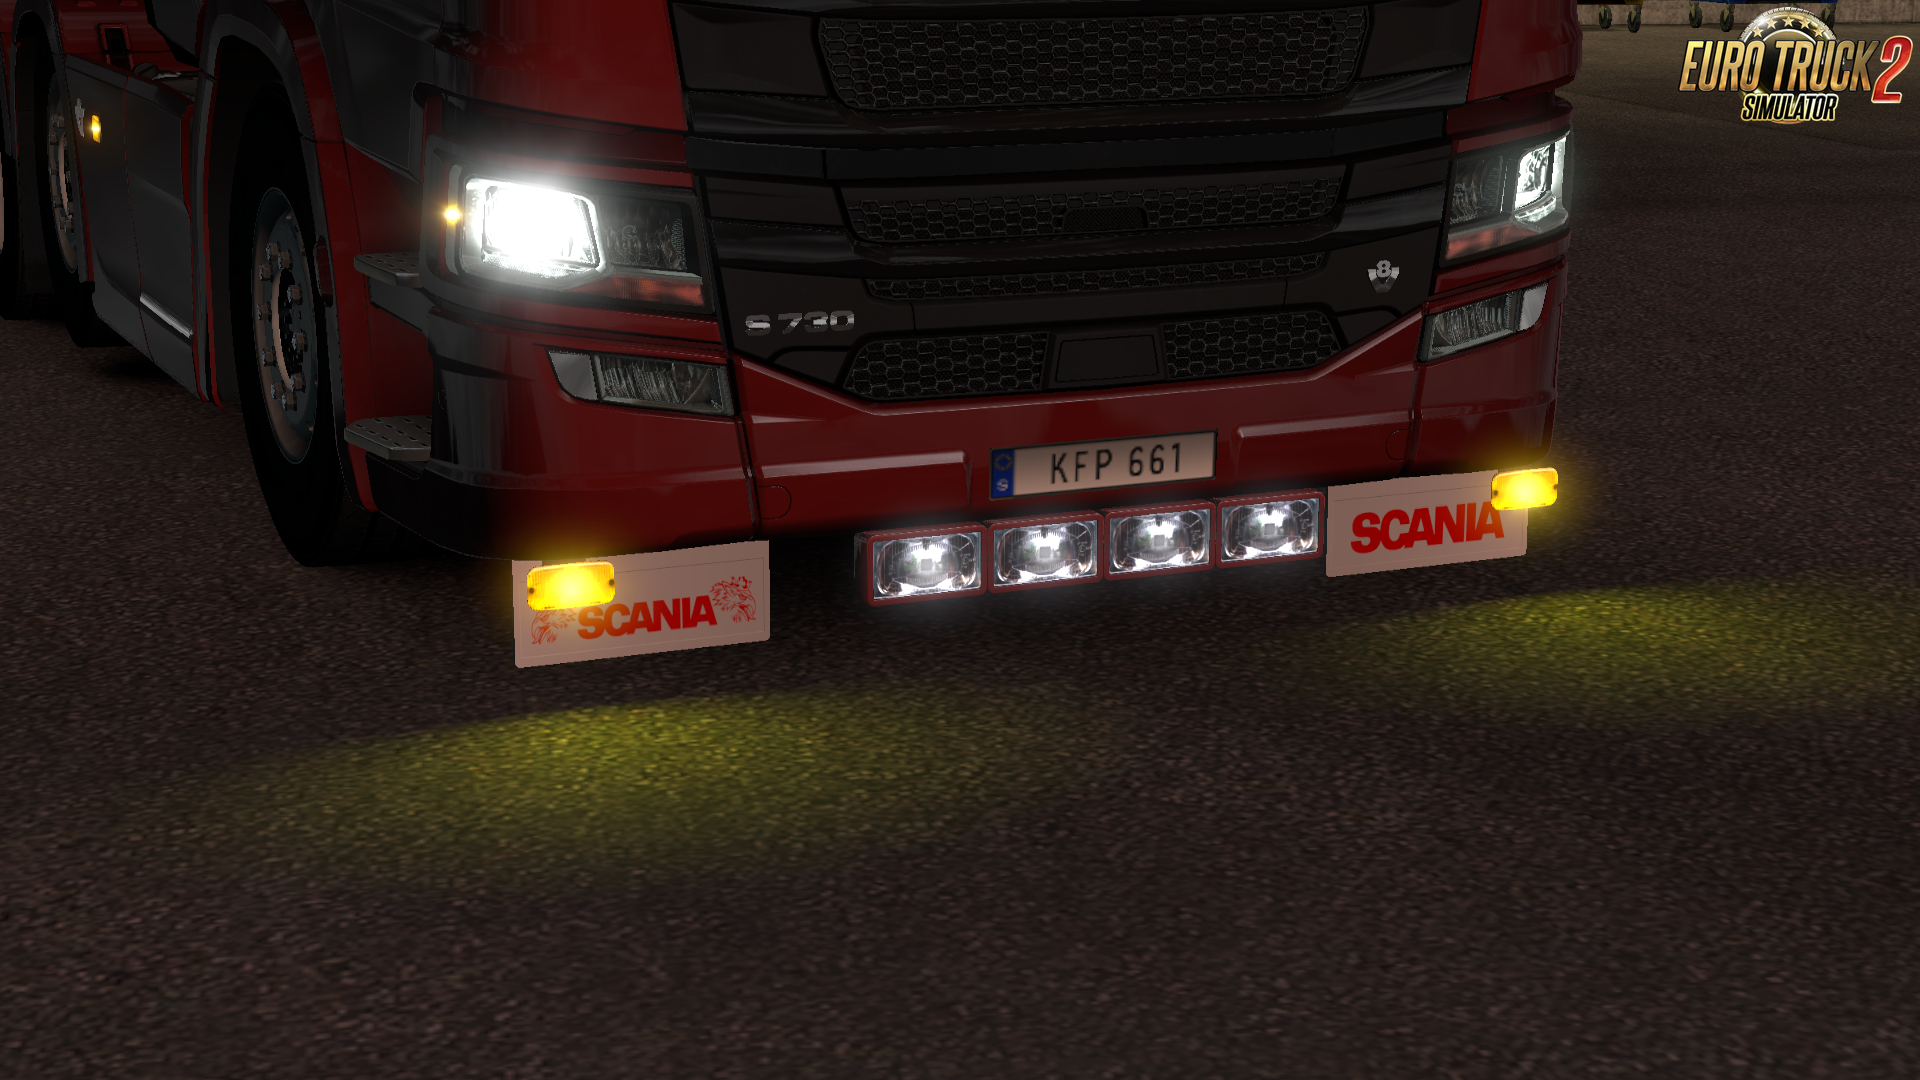 Lobar Scania Next Gen v1.0